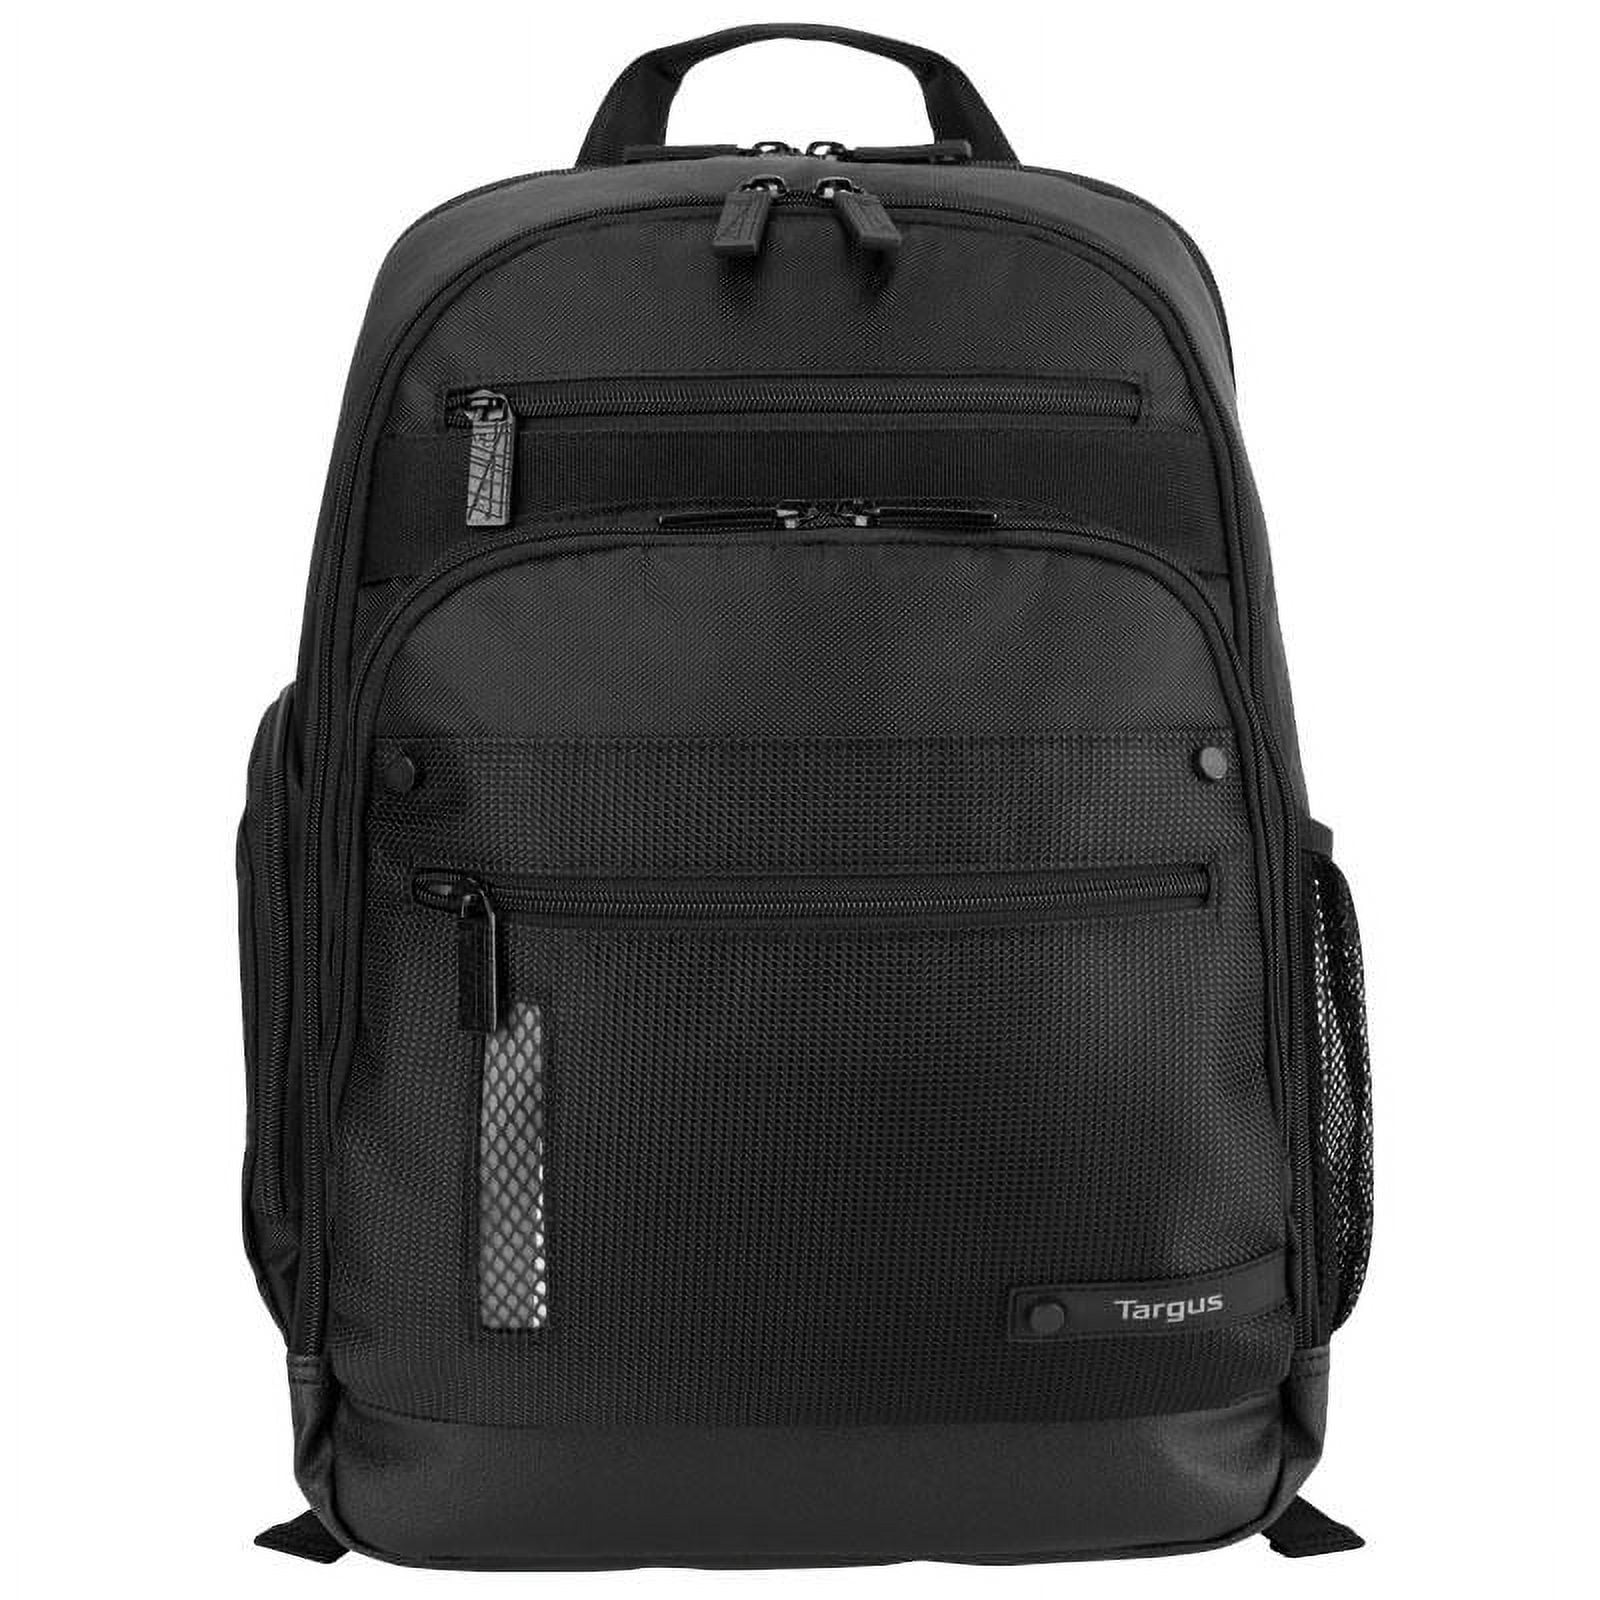 14" Targus Revolution Notebook Carrying Backpack (Black) $6